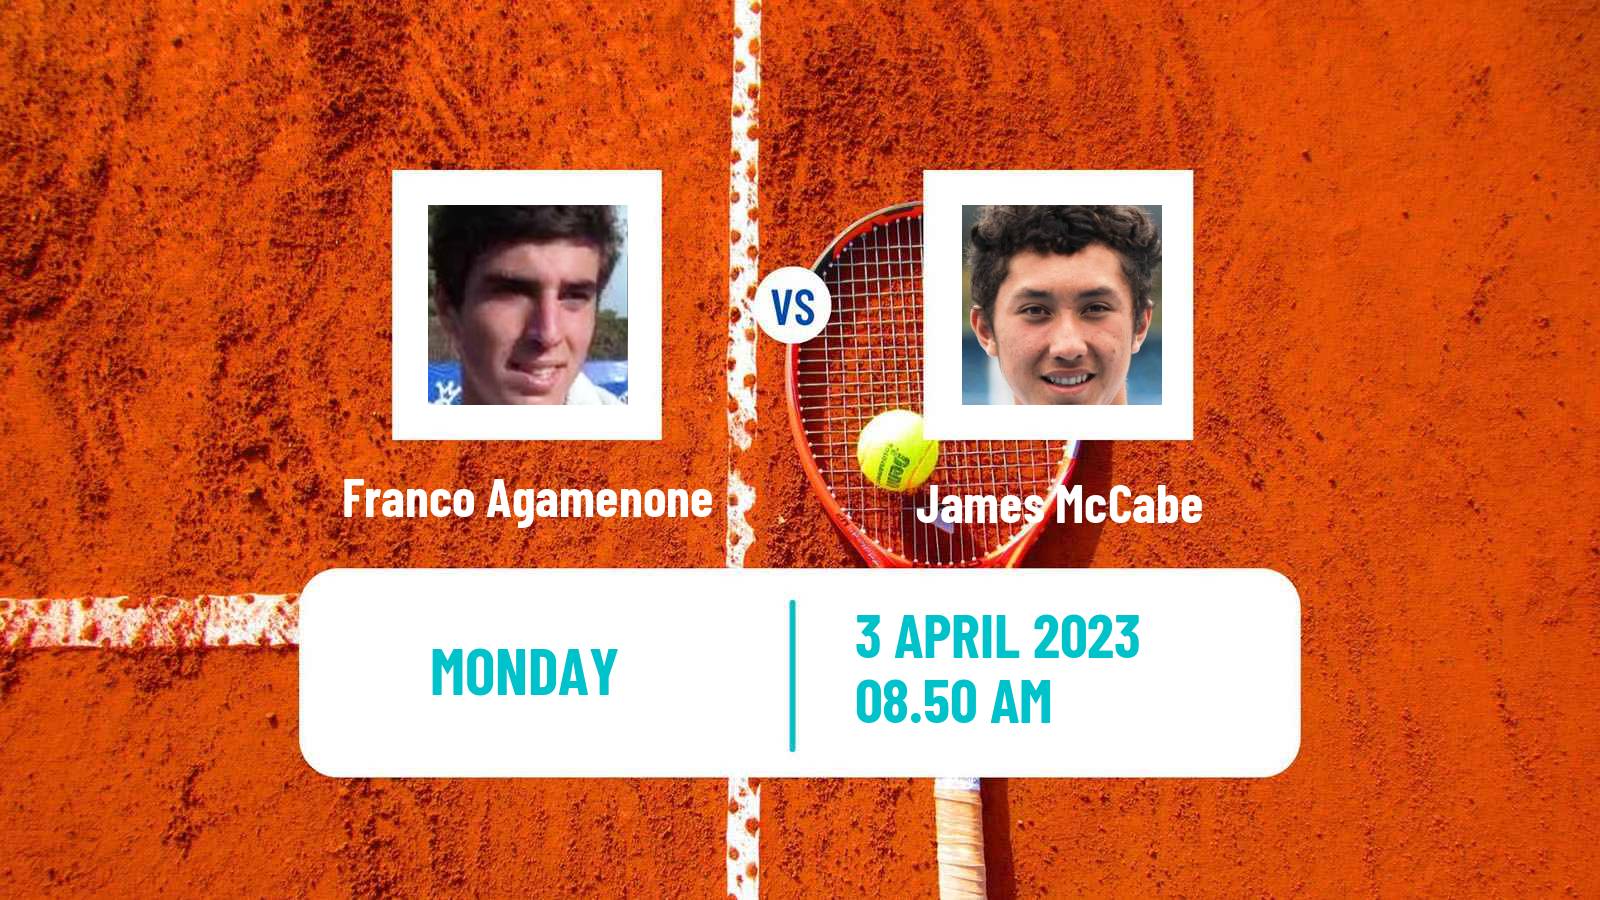 Tennis ATP Challenger Franco Agamenone - James McCabe